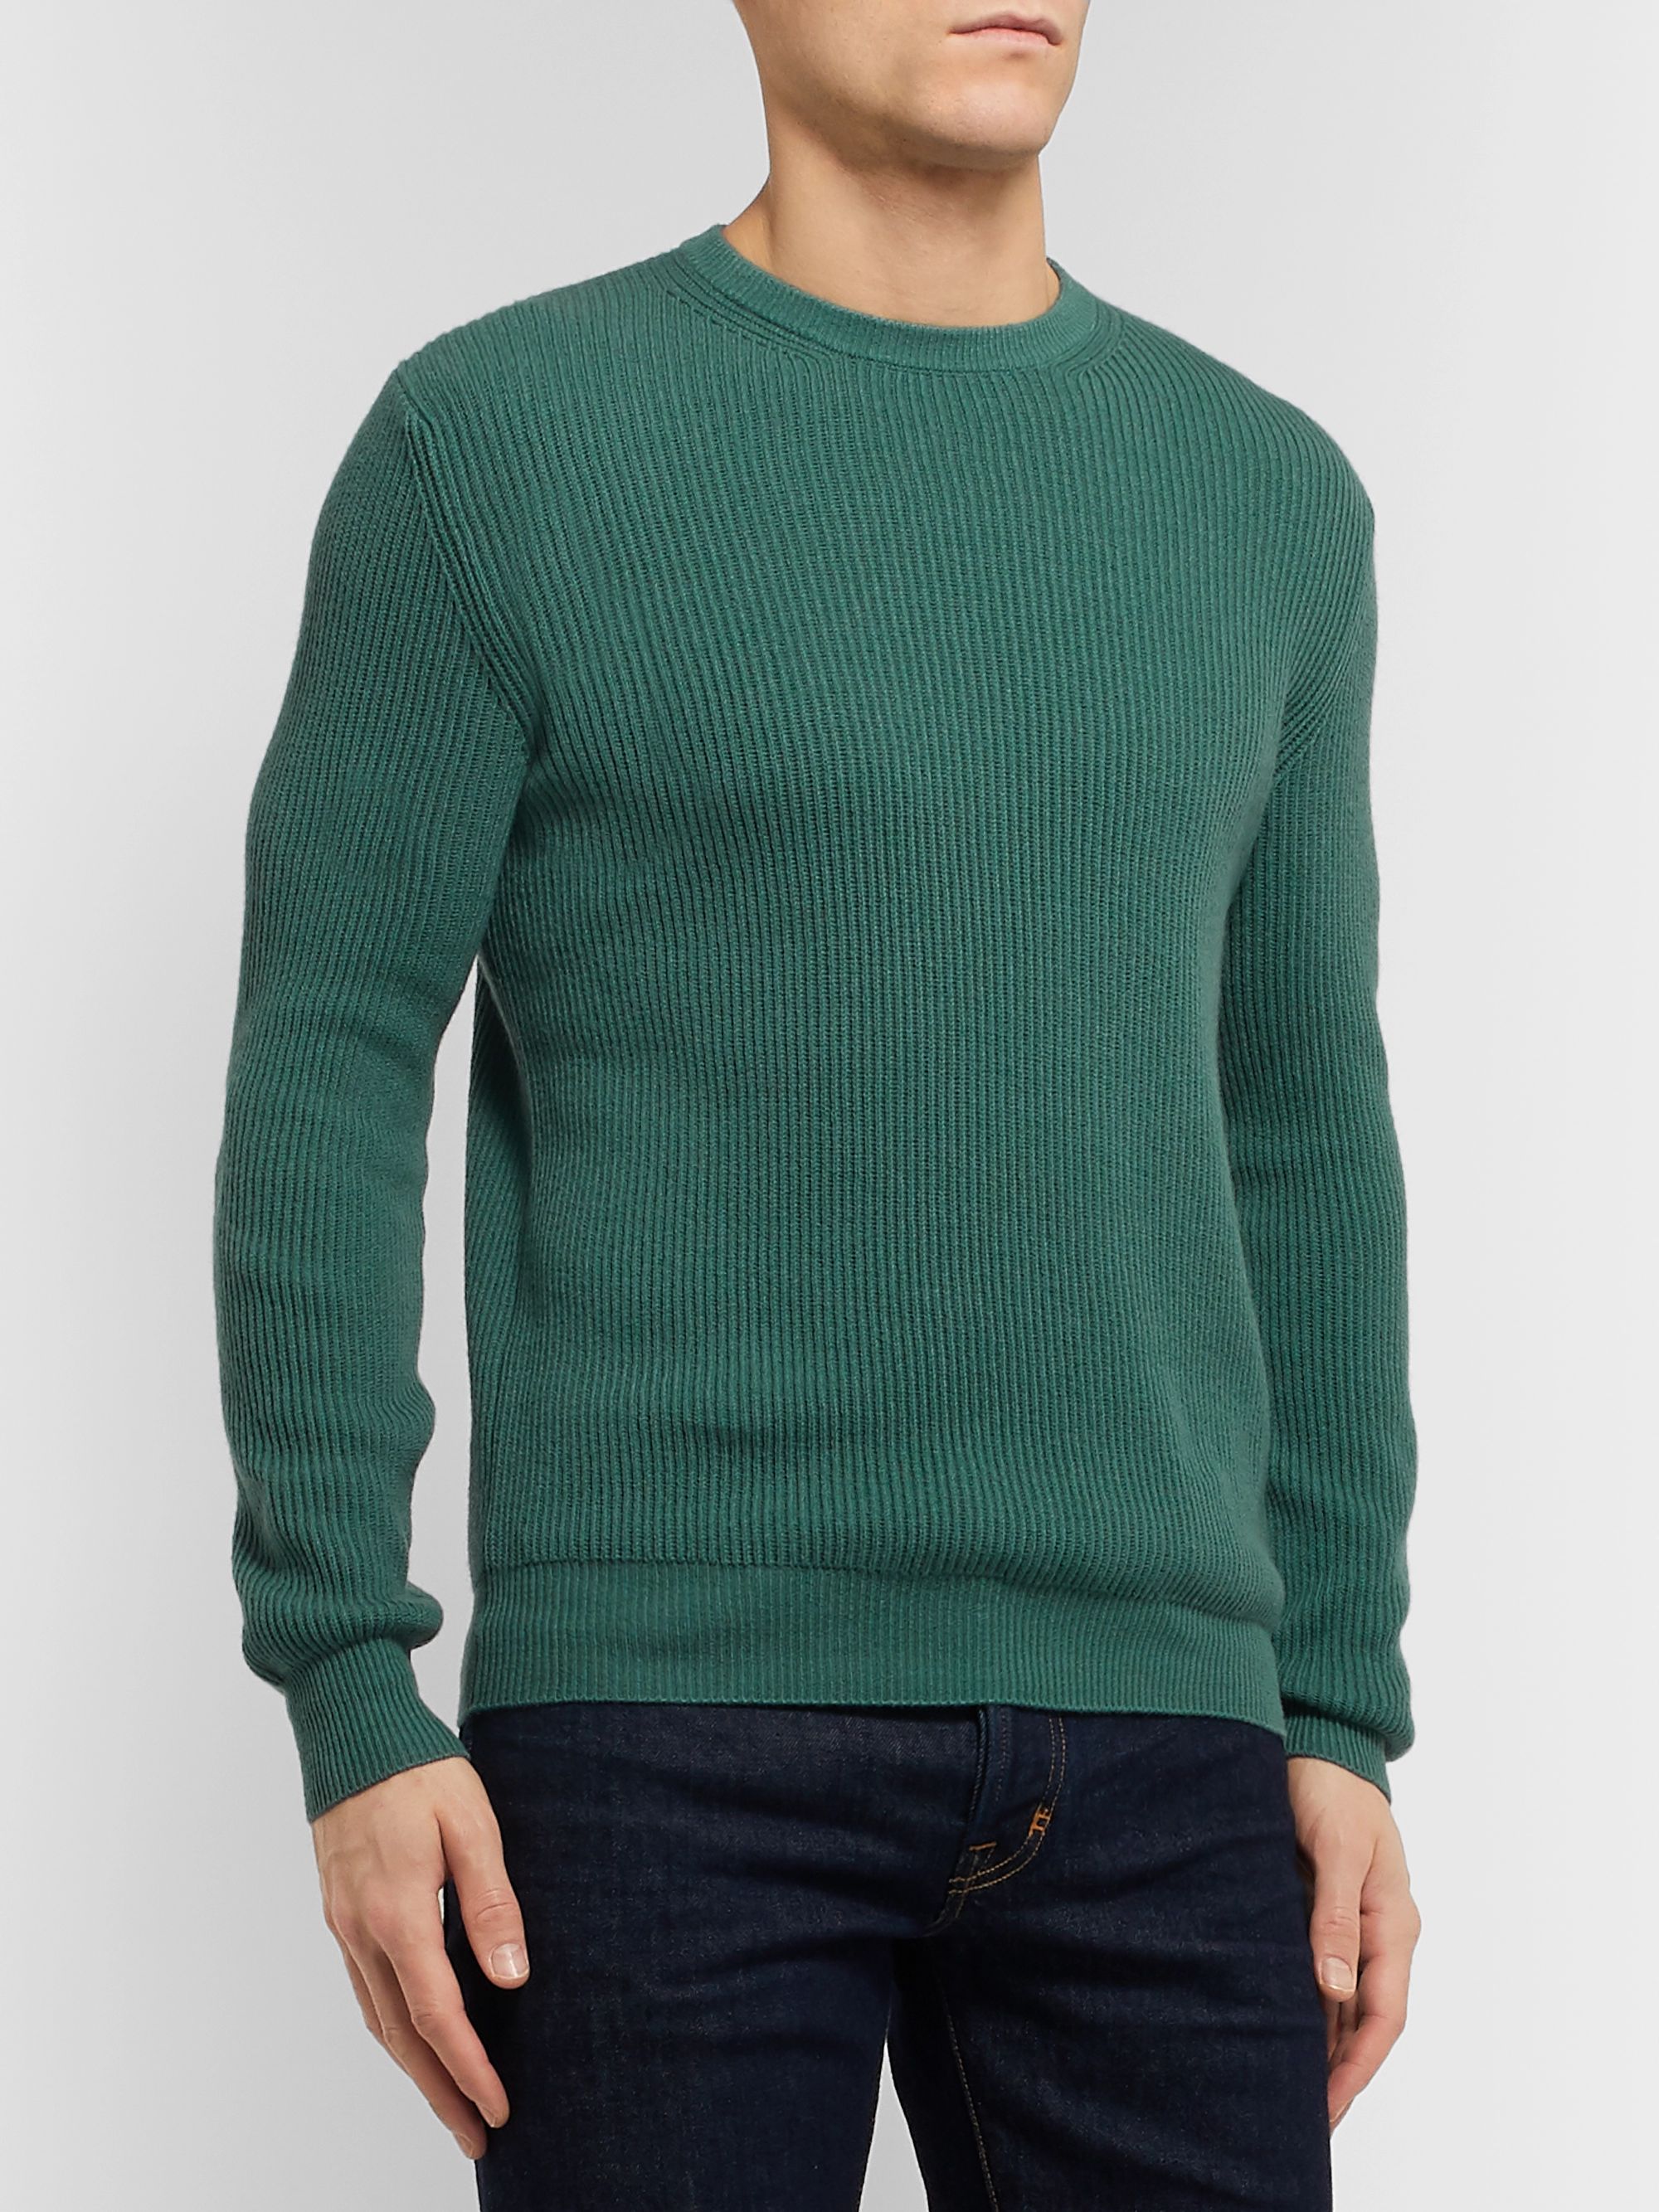 Green Slim-Fit Ribbed Cashmere Sweater | LORO PIANA | MR PORTER